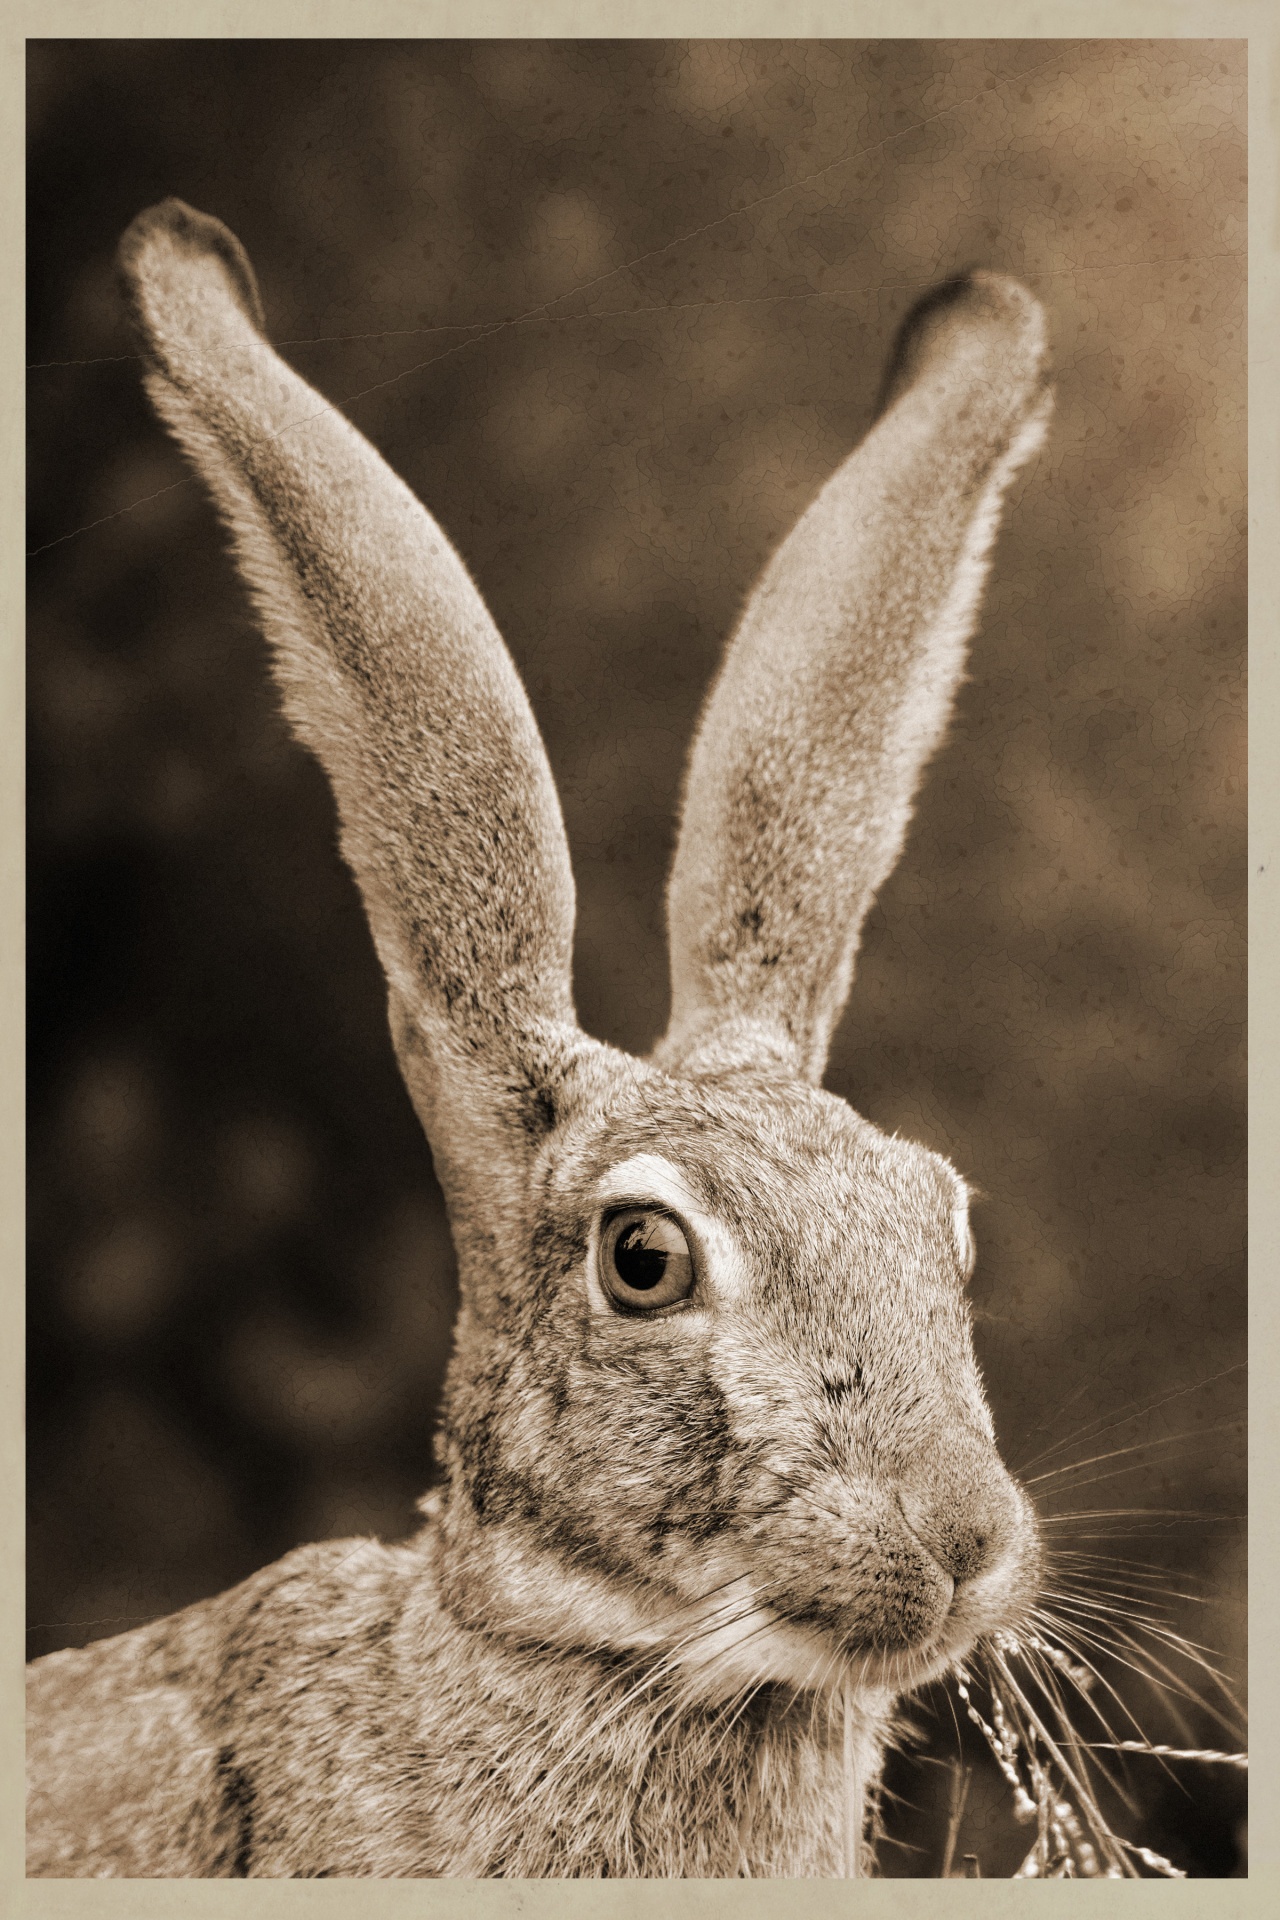 Vintage sepia photo of a hare close-up portrait